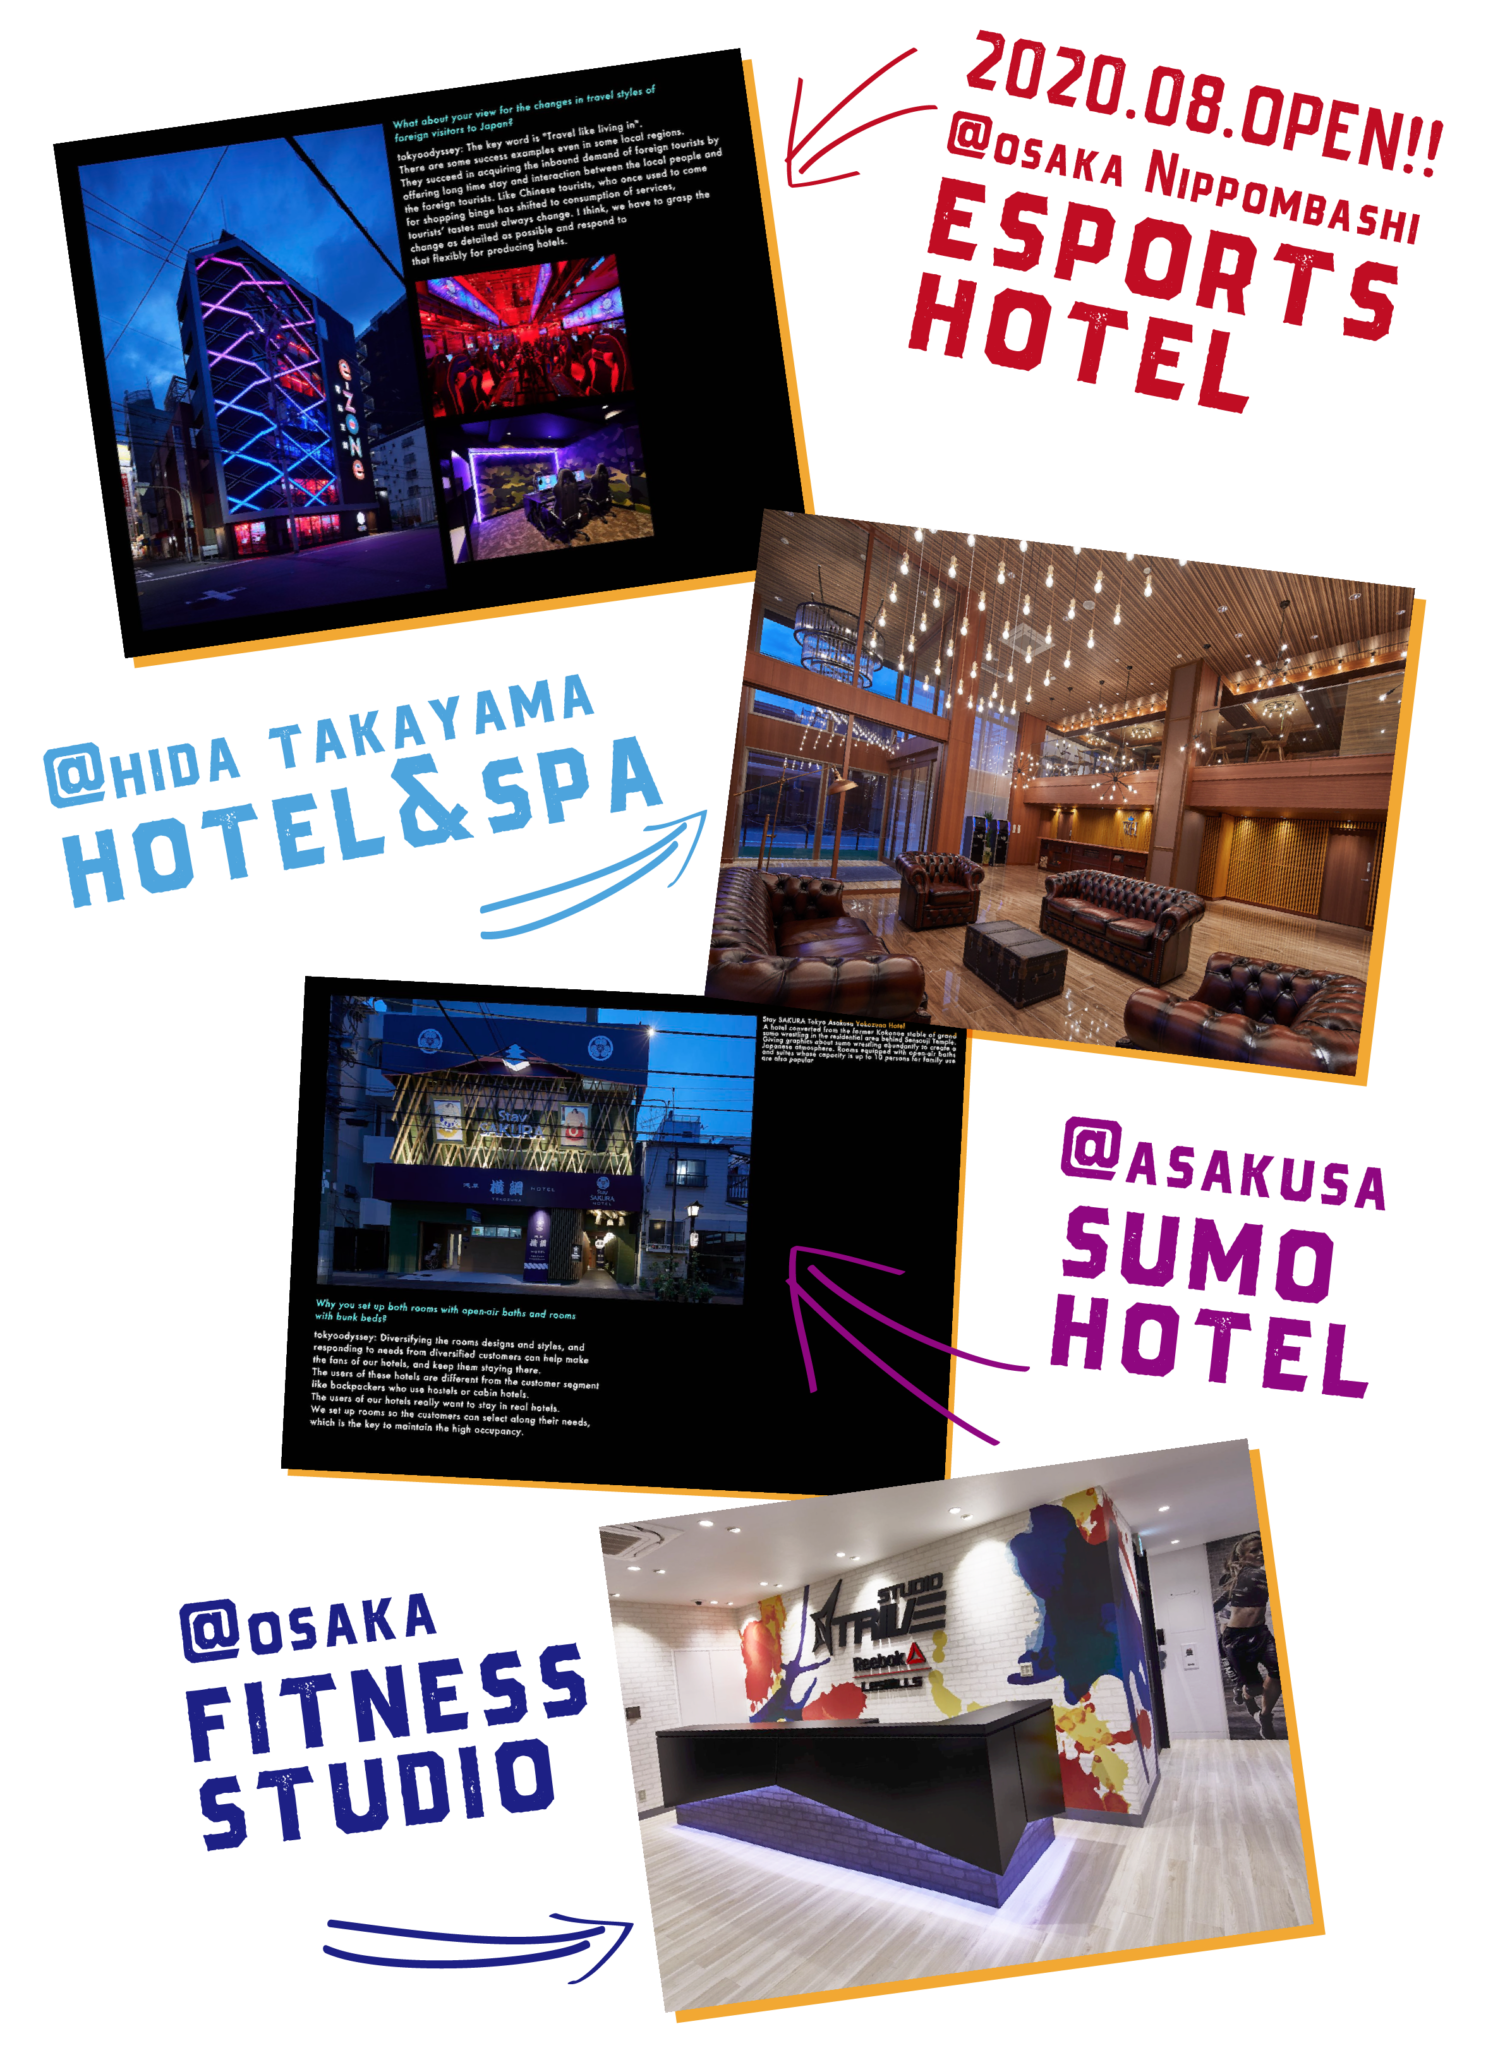 esportshotel hotel&spa sumo hotel fitnessstudio